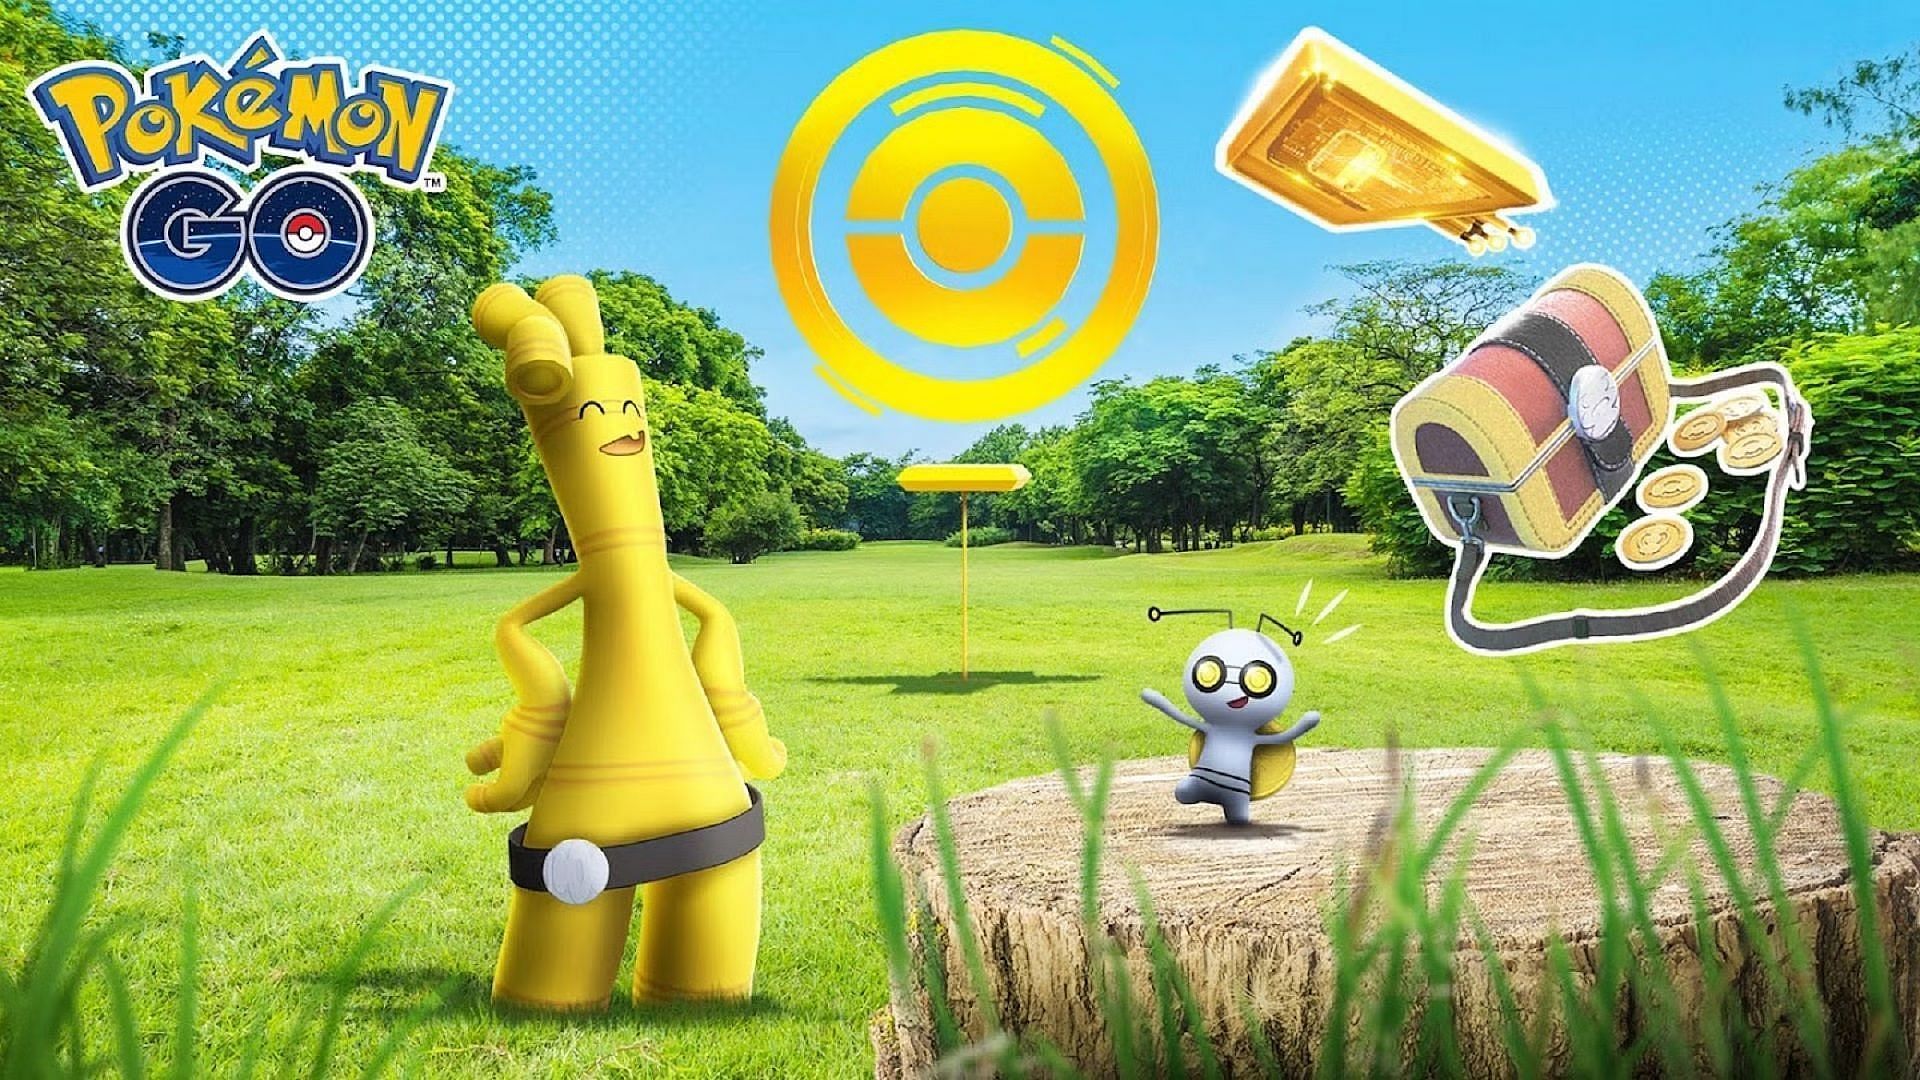 Pokemon GO: What are Gold PokeStops?